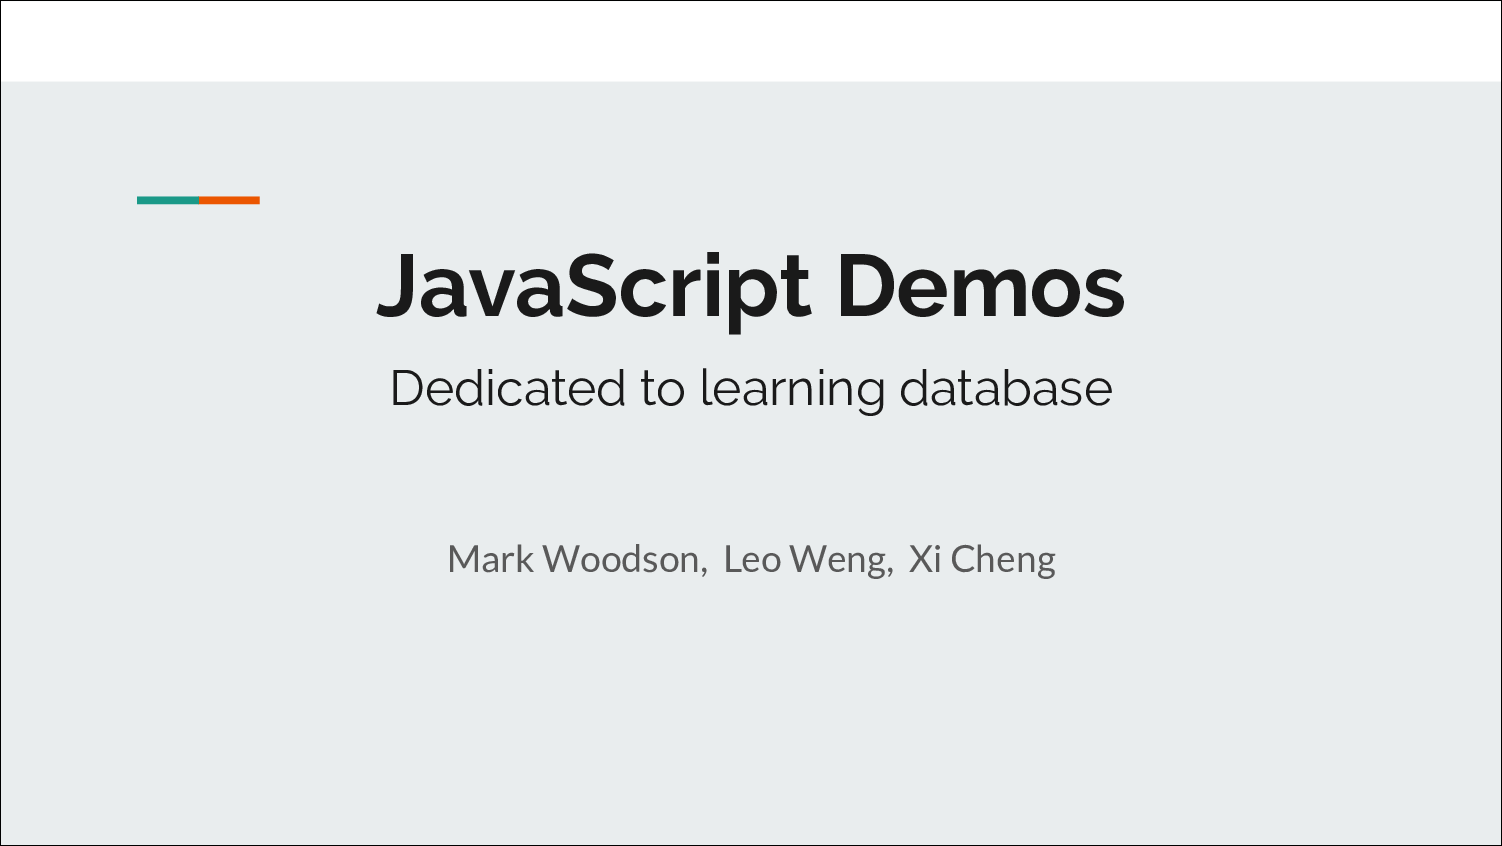 [PRESENTATION] Learning Database Management Protocols via JavaScript Demos (I)